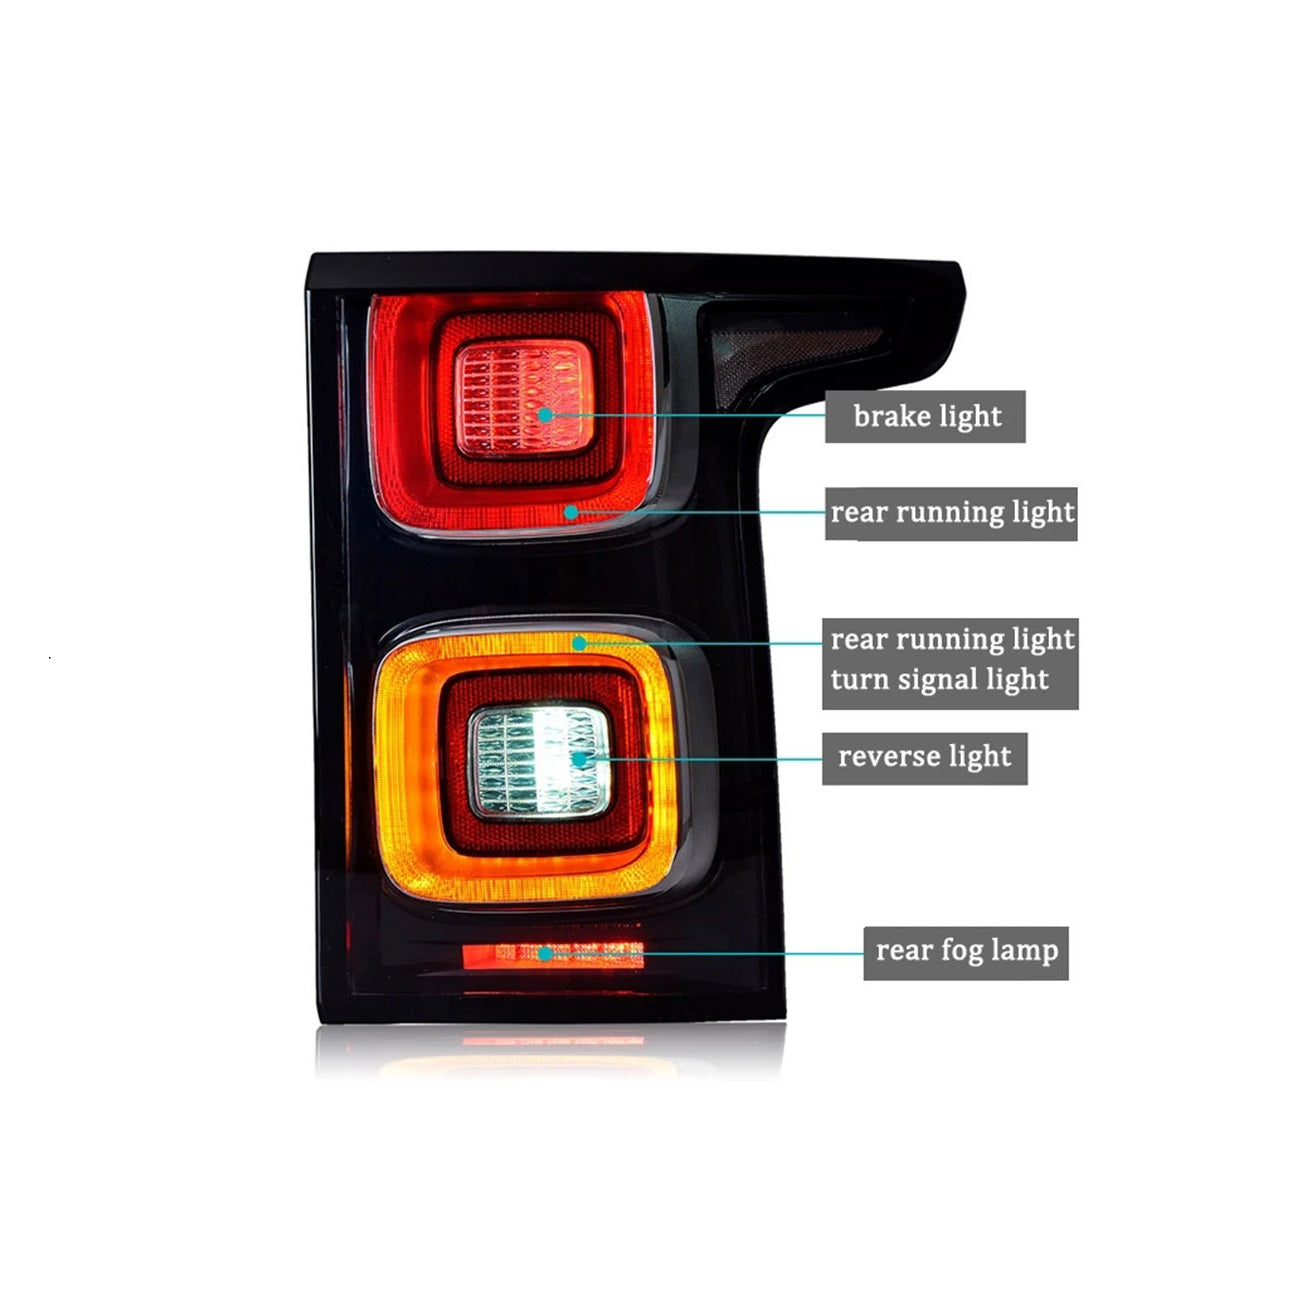 Premium Euronavigate LED Tail Lights for Range Rover Vogue L405. Upgrade to LED Brake-Tail Lights for your 2013-2017 Range Rover Vogue L405. Full LED functionality & plug-and-play ease.